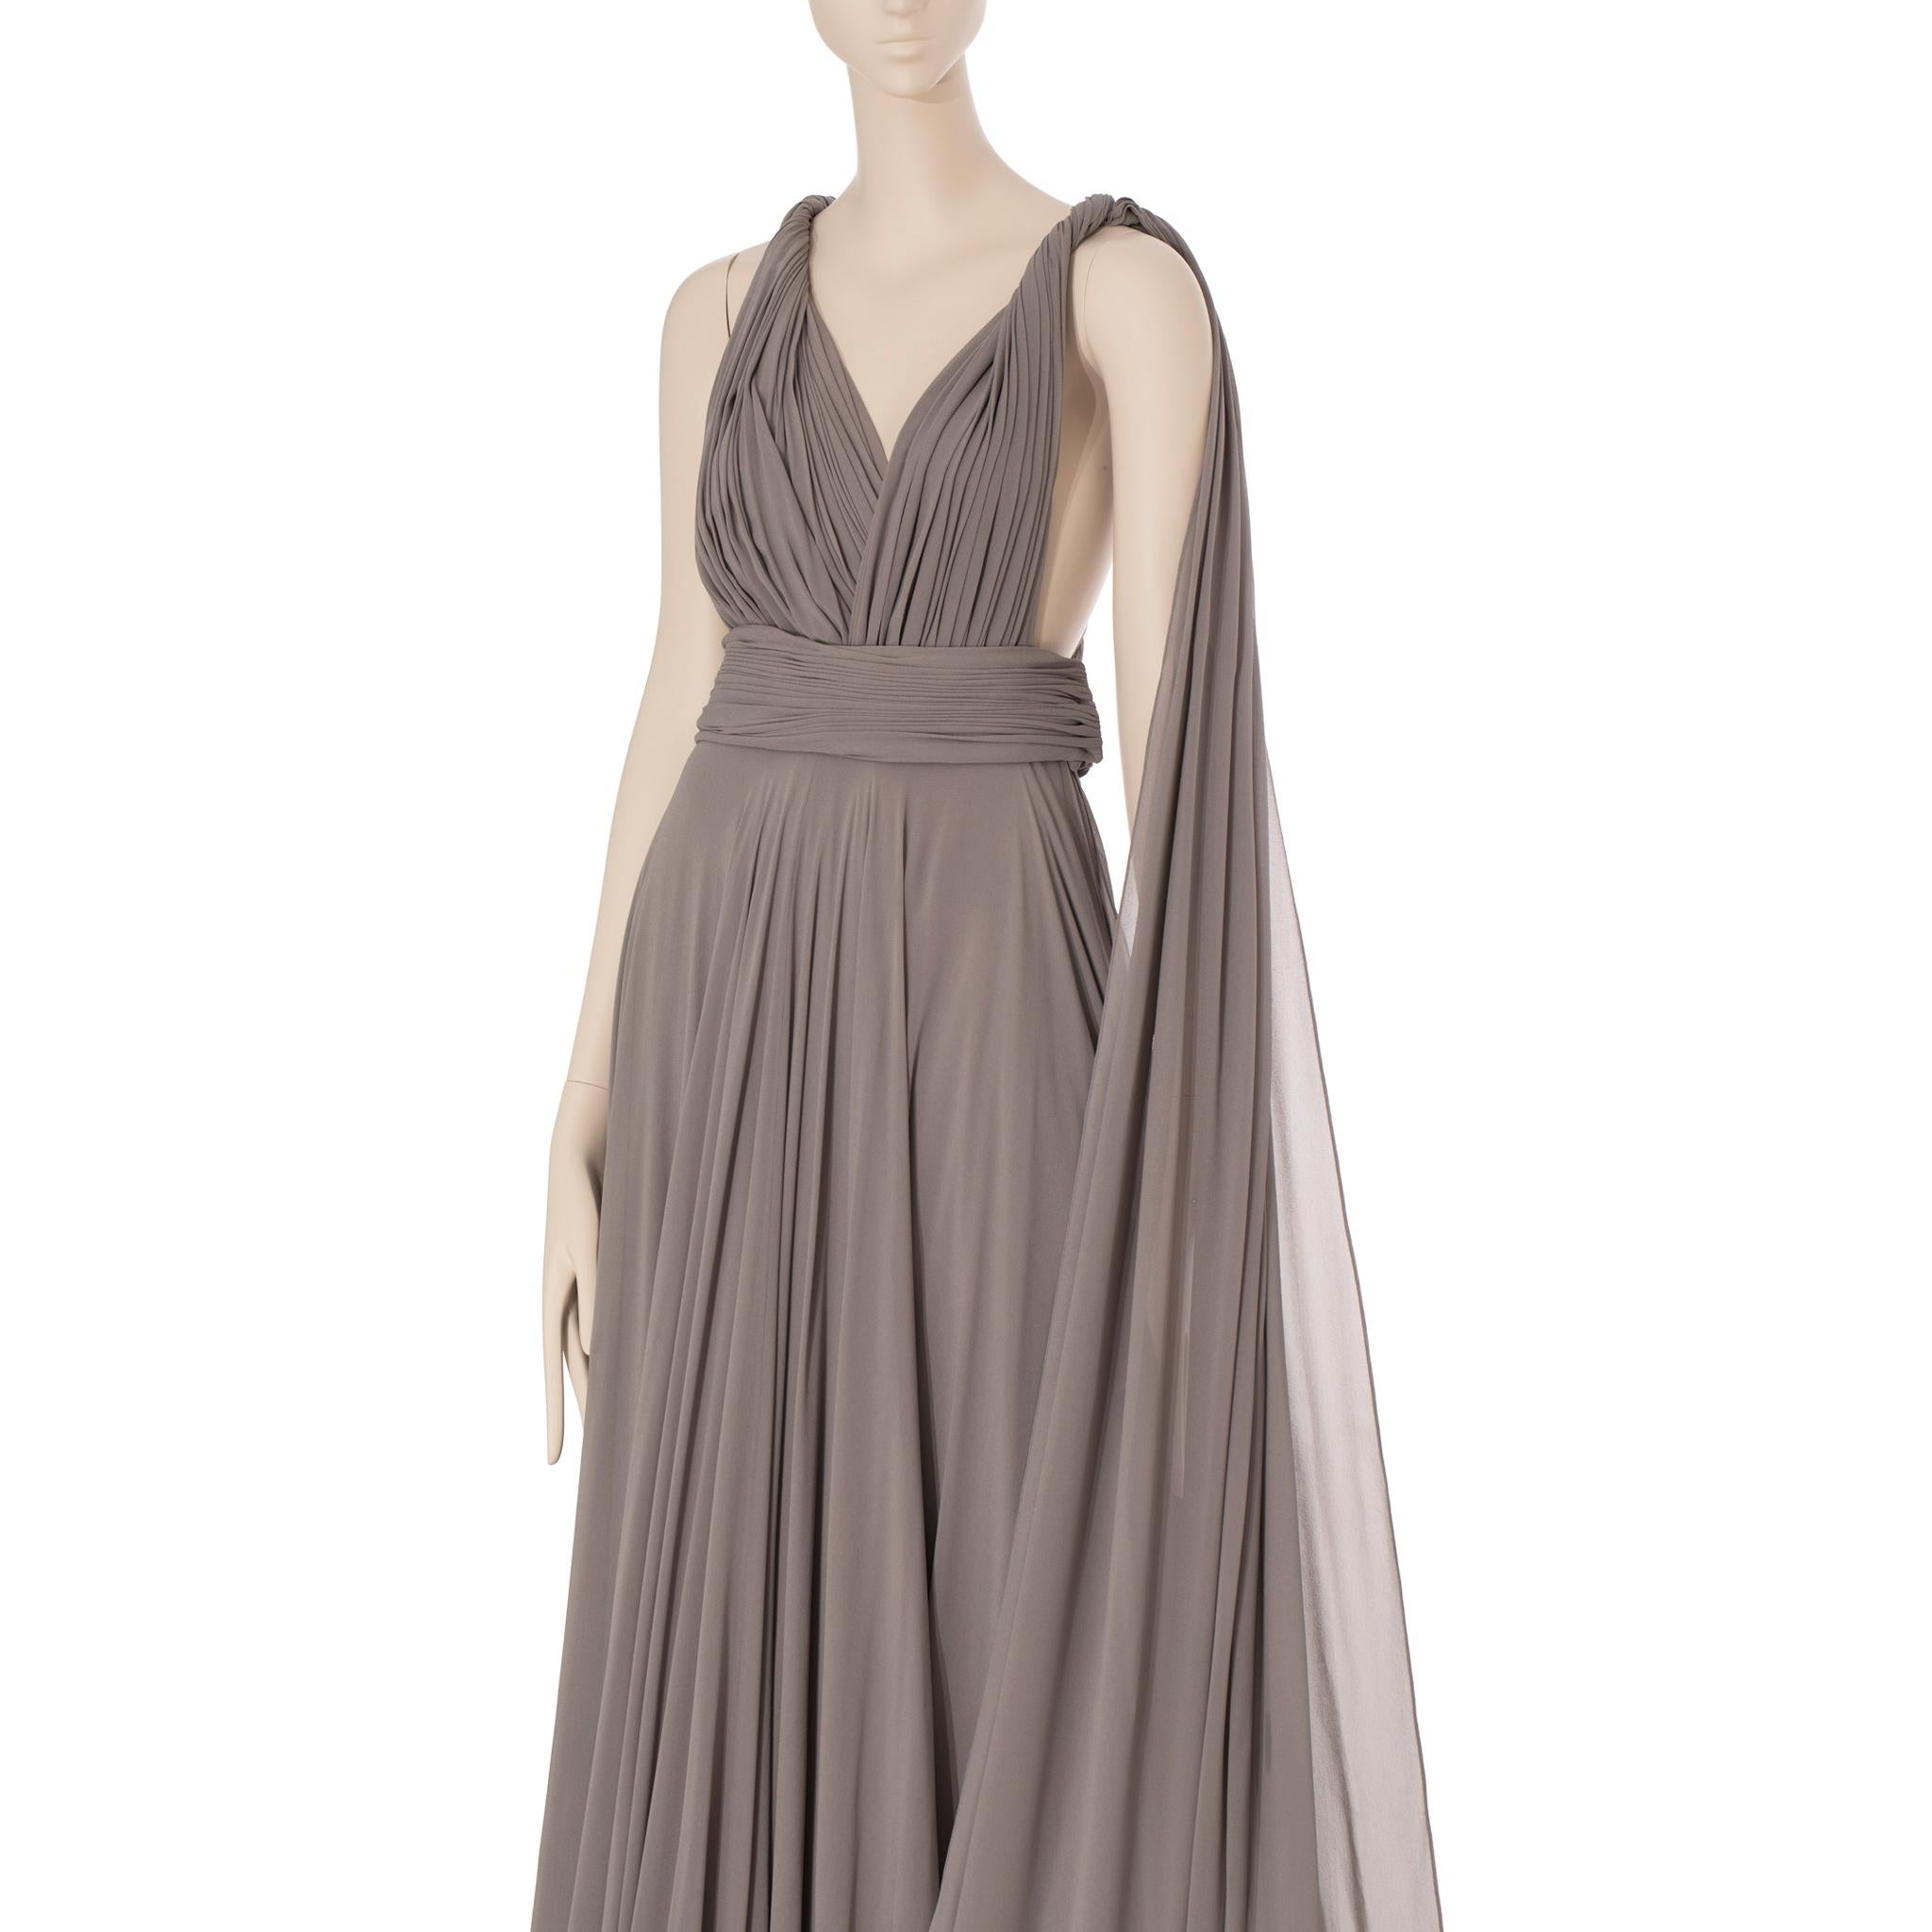 Yves Saint Laurent Couture Grey Evening Dress 36 Fr 8